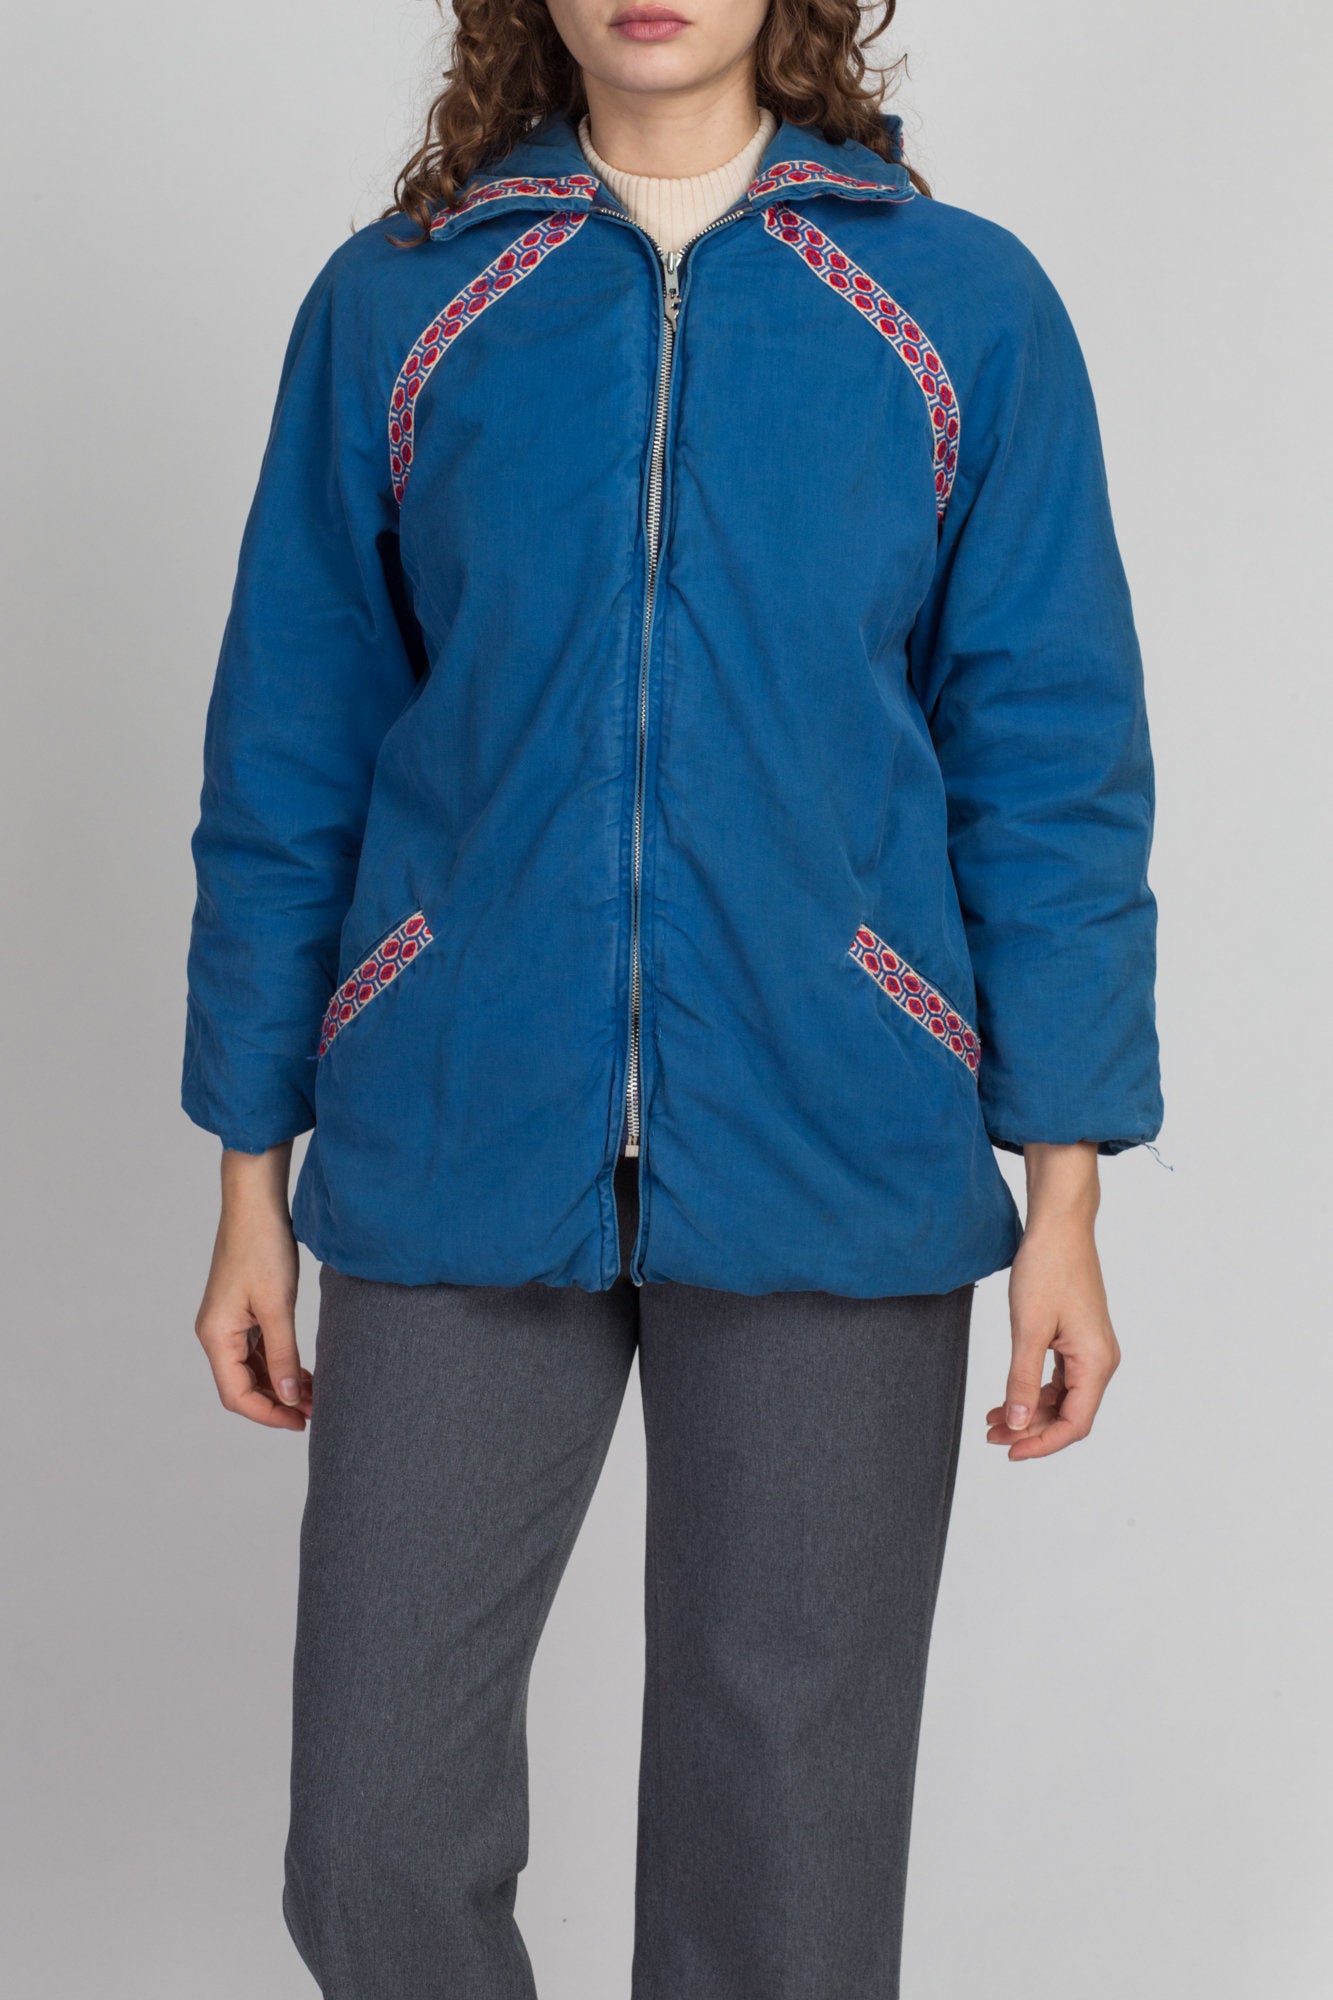 Rare 40s 50s White Stag Zip Up Ski Jacket - Petite Small to Medium | Vintage Women&#39;s Blue Southwestern Trim Hooded Puffy Parka Coat